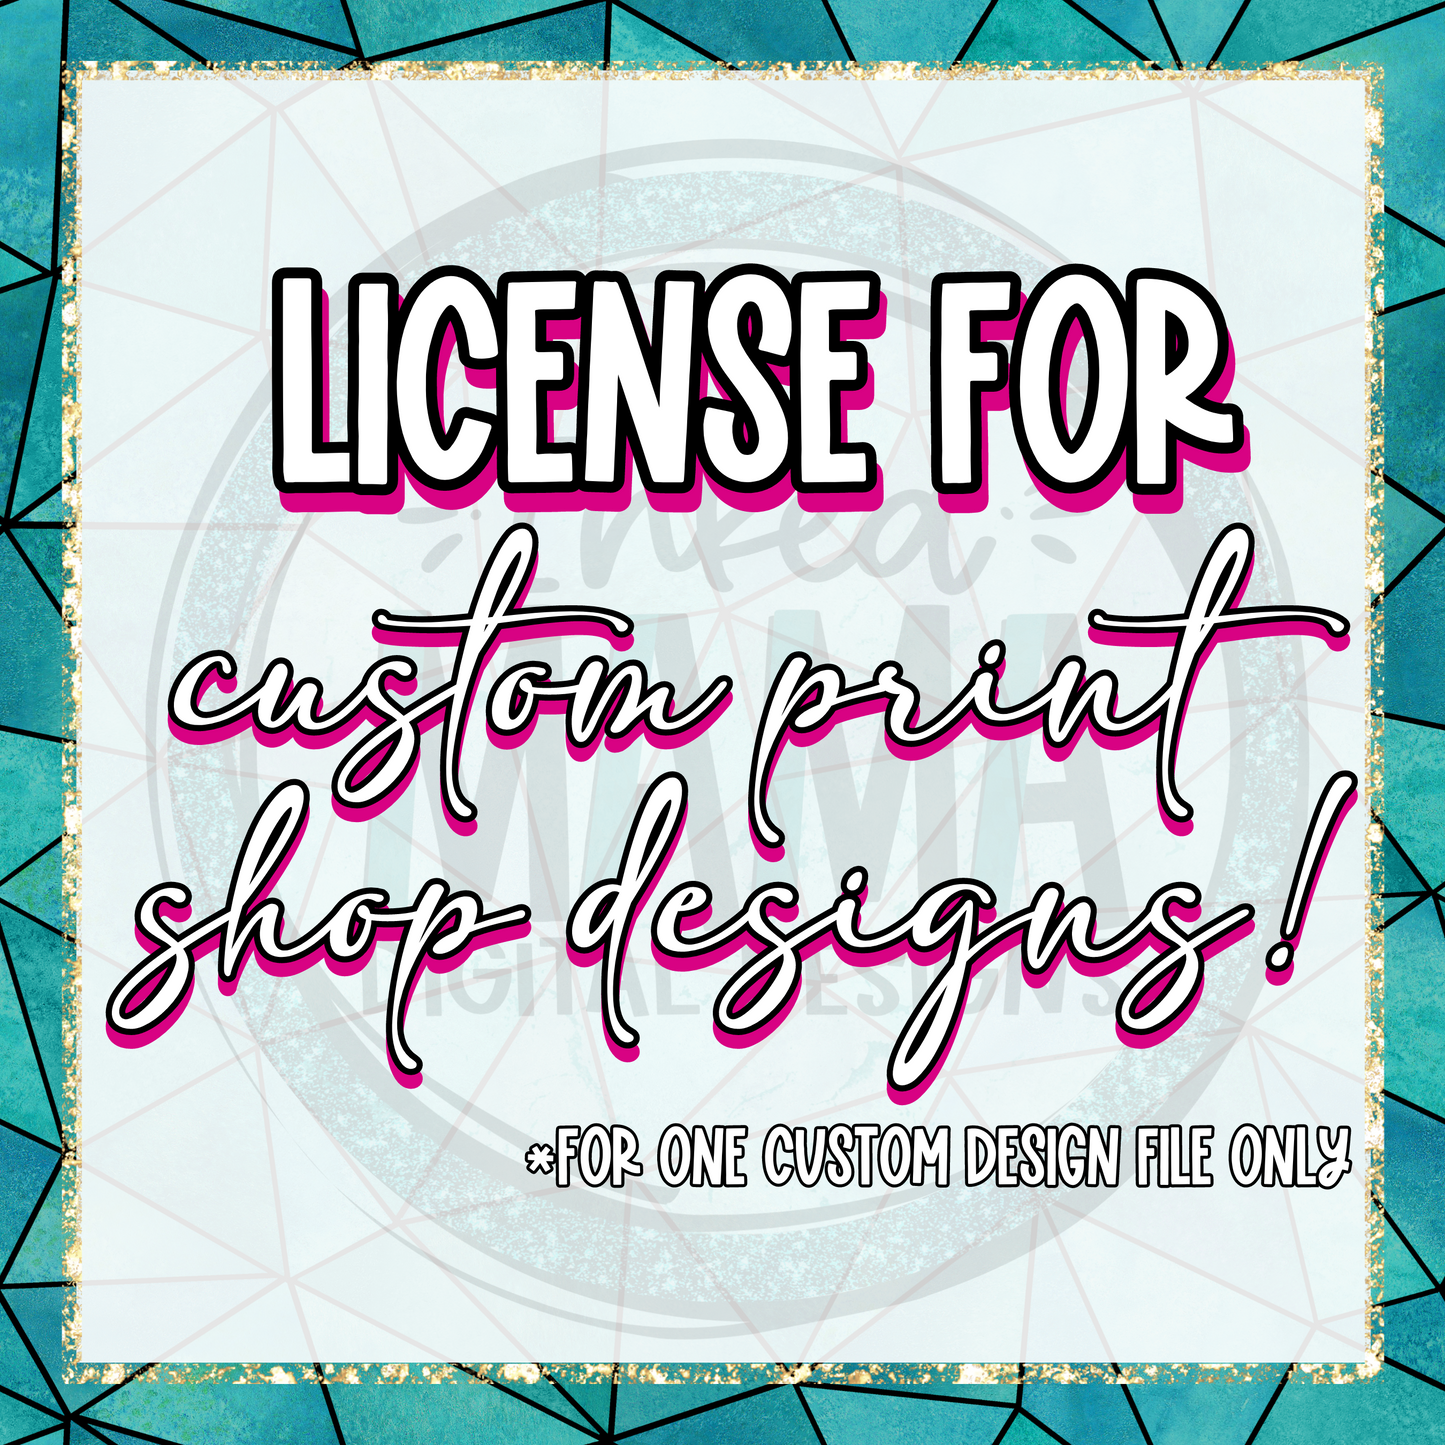 License Fee for Custom Print Shop Designs